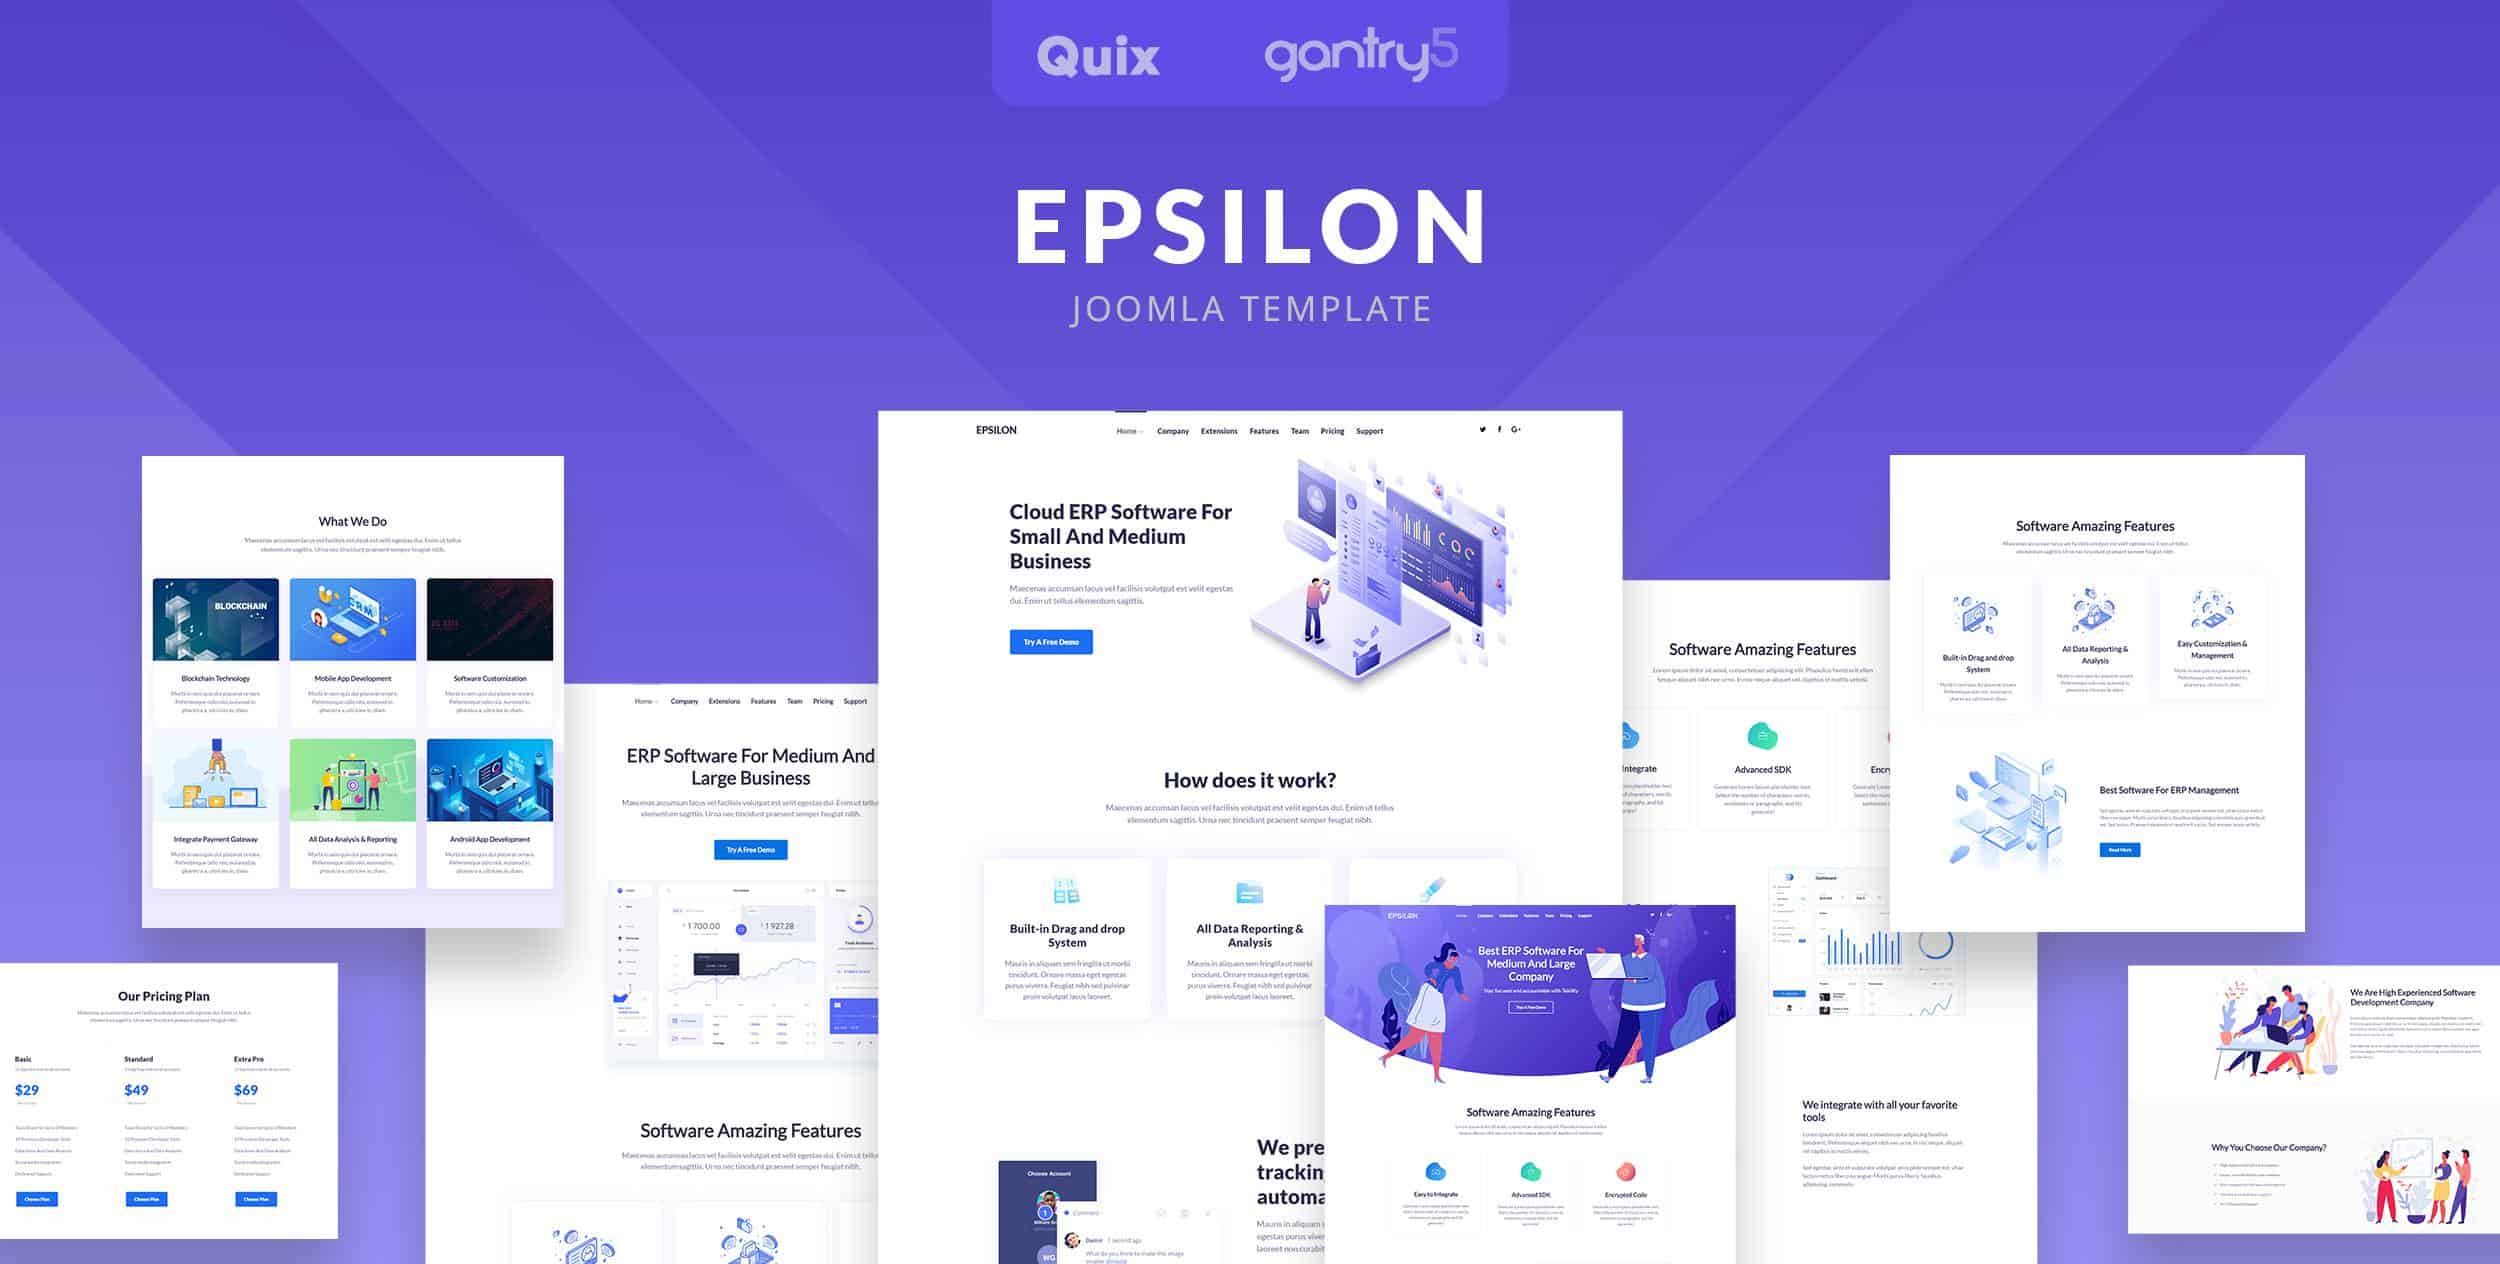 Introducing Epsilon - Best Joomla Template for SaaS Website, Web Services and App Development Companies